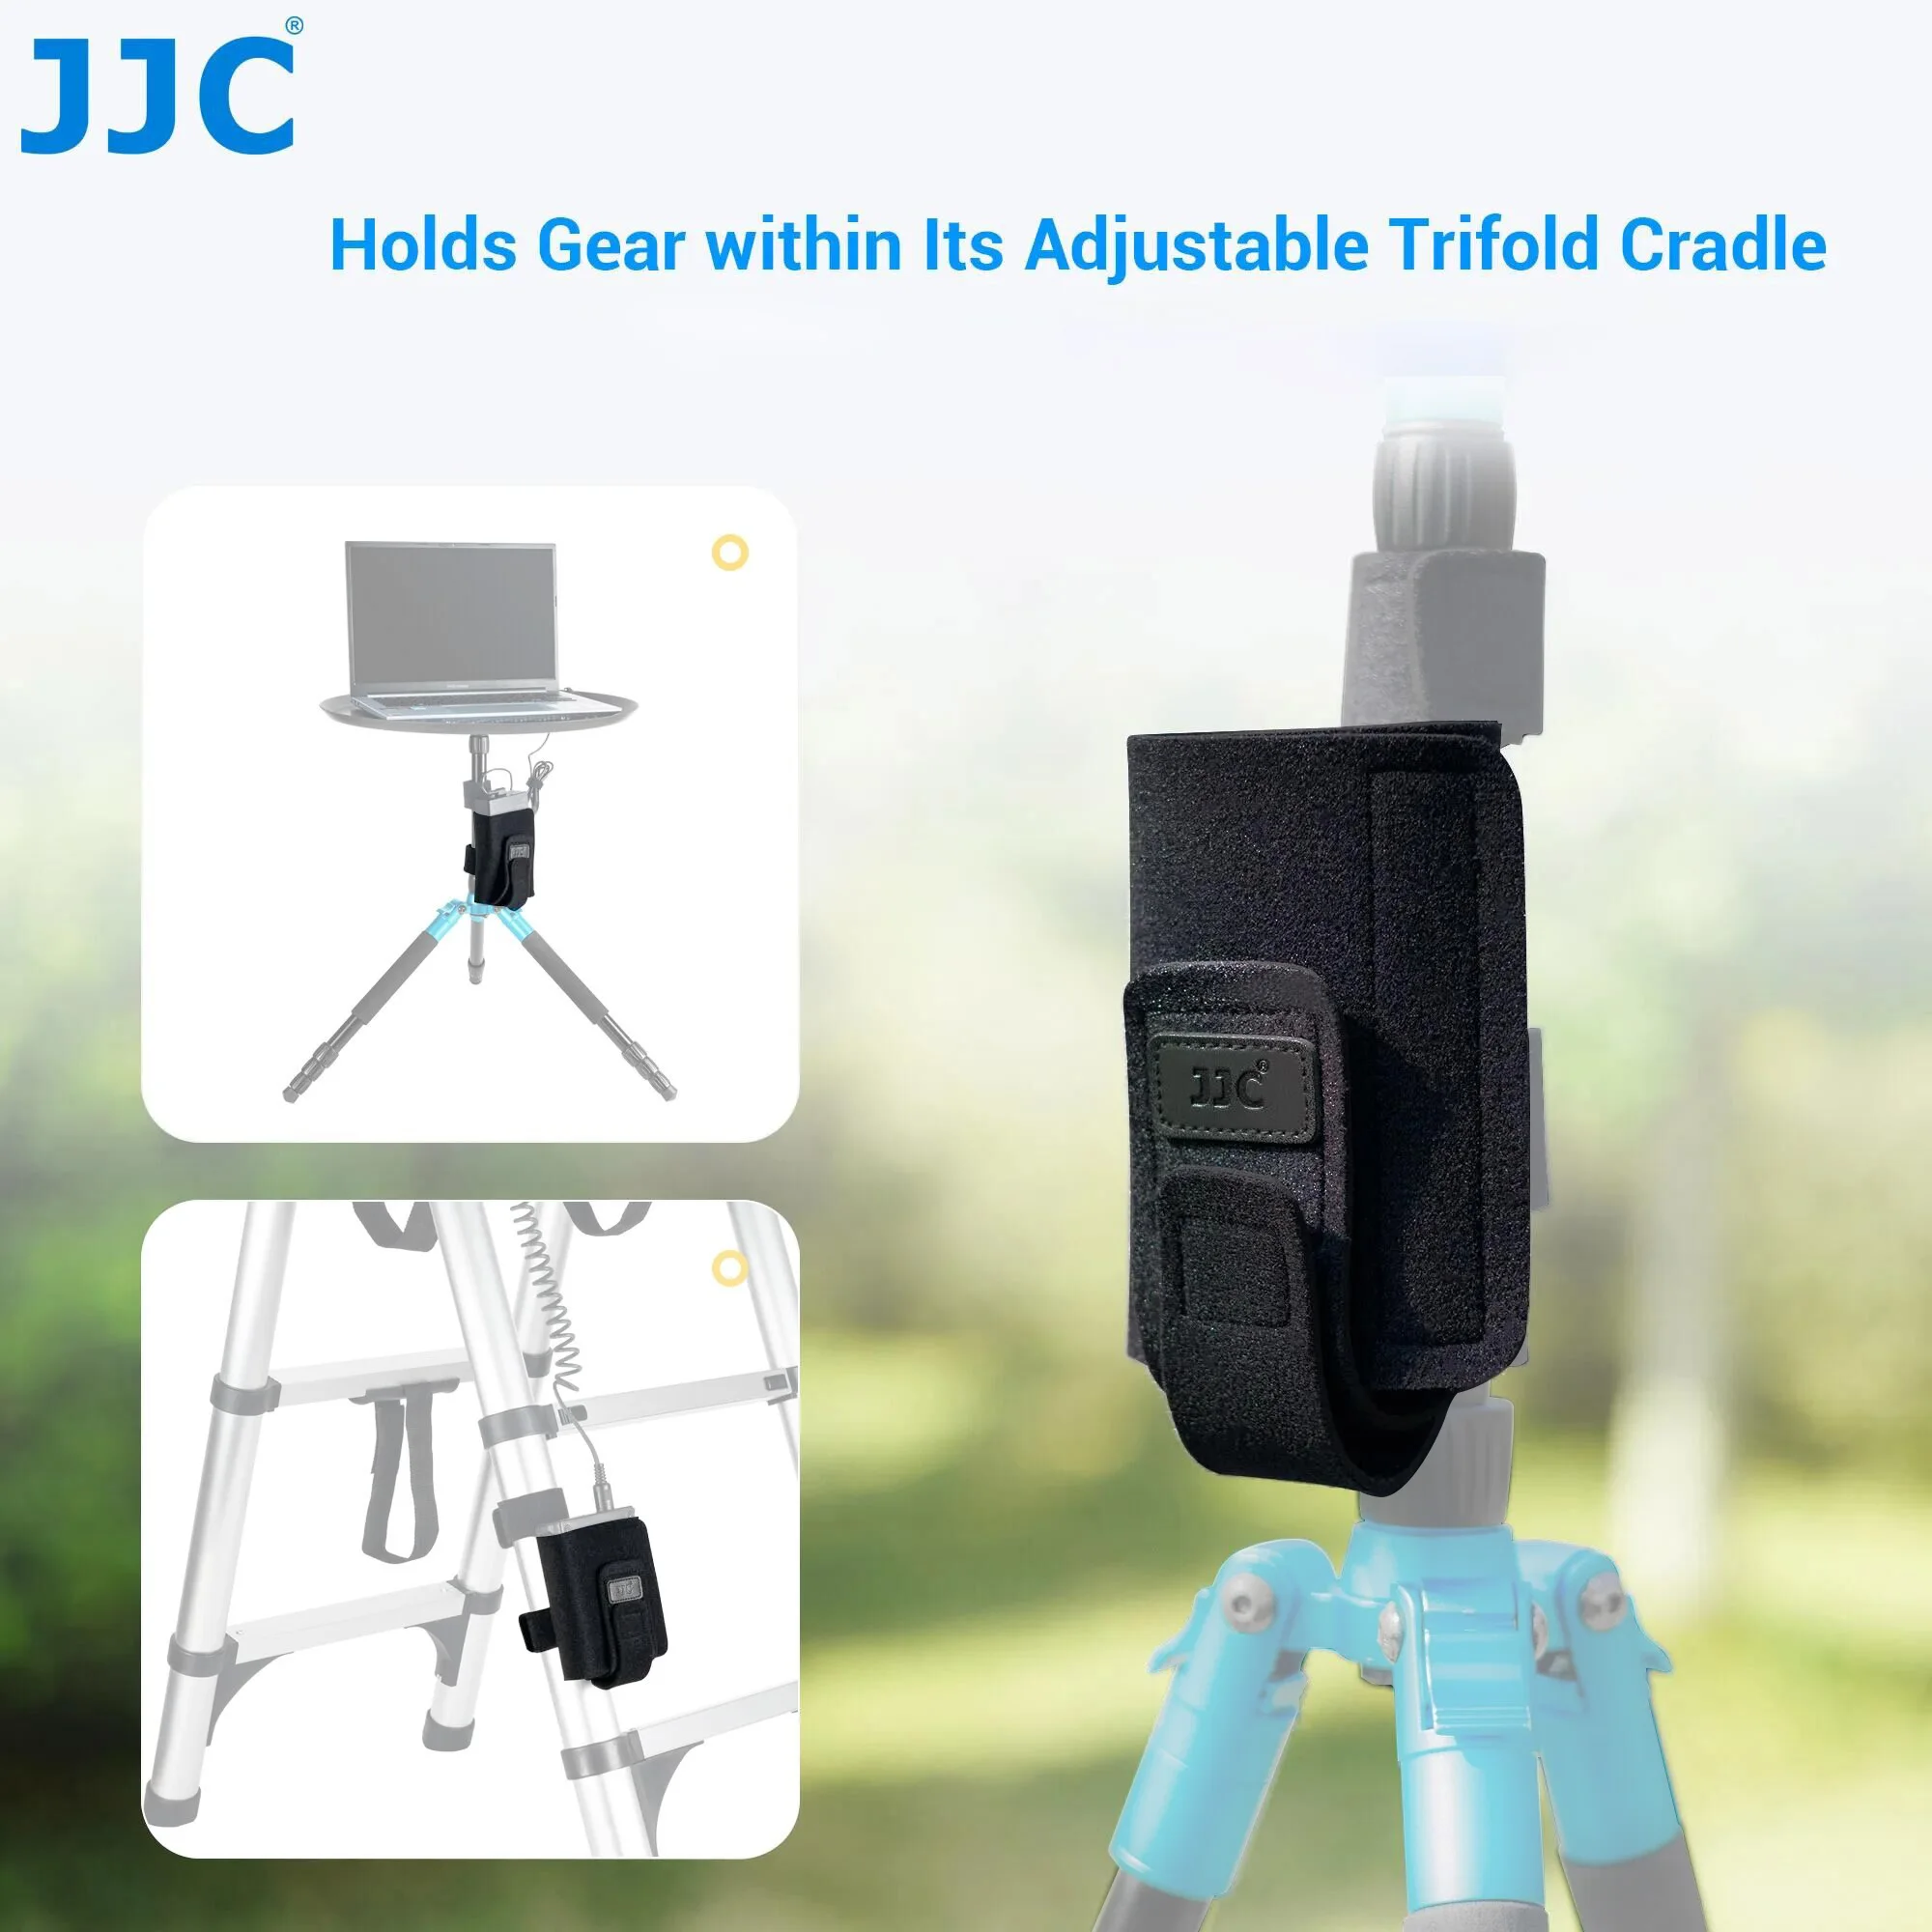 JJC Tripod Legs Mounting Strap Universal Equipment Mounting Strap Bag for Tripod,Light Stand Bag,Photography Ladder,Pole,Beam